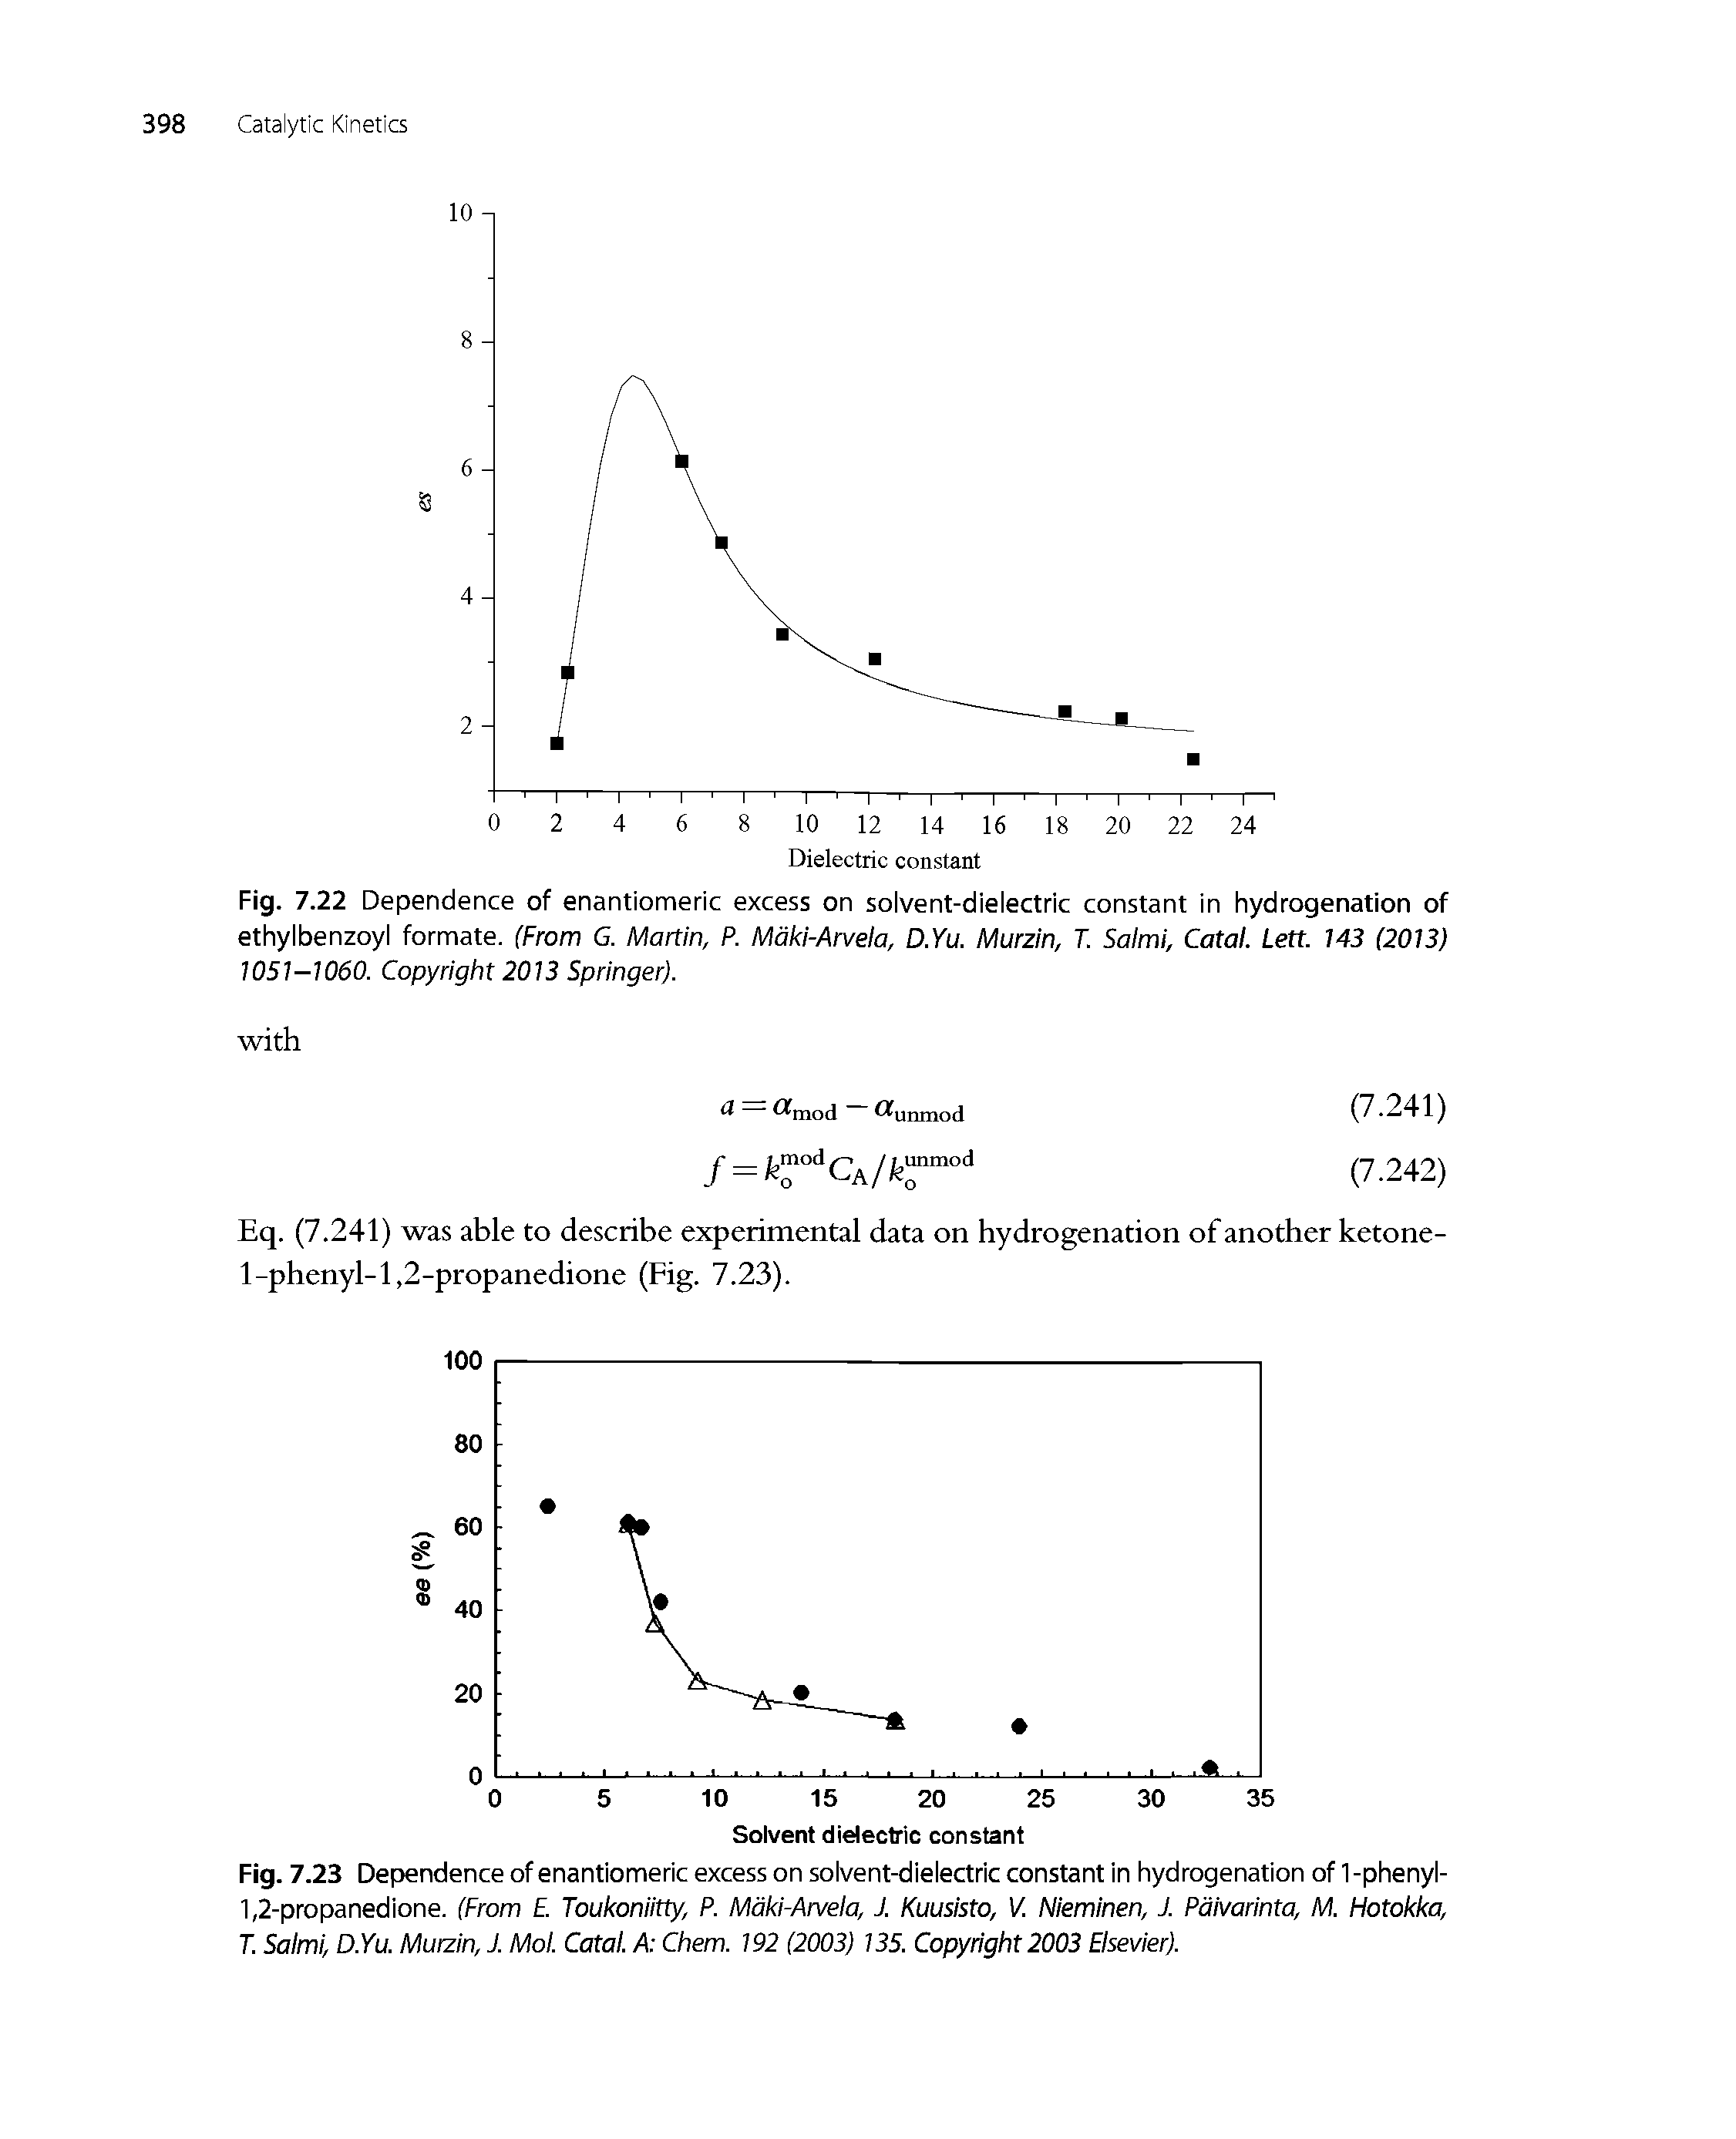 Fig. 7. 23 Dependence of enantiomeric excess on solvent-dielectric constant in hydrogenation of 1-phenyl-1,2-propanedione. (From Toukoniitty, P. Maki-Arvela, J. Kuusisto, V. Nieminen, J. Paivarinta, M. Hotokka, T. Salmi, D.Yu. Murzin, J. Mol. Catal. A Chem. 192 (2003) 135. Copyright 2003 Elsevier).